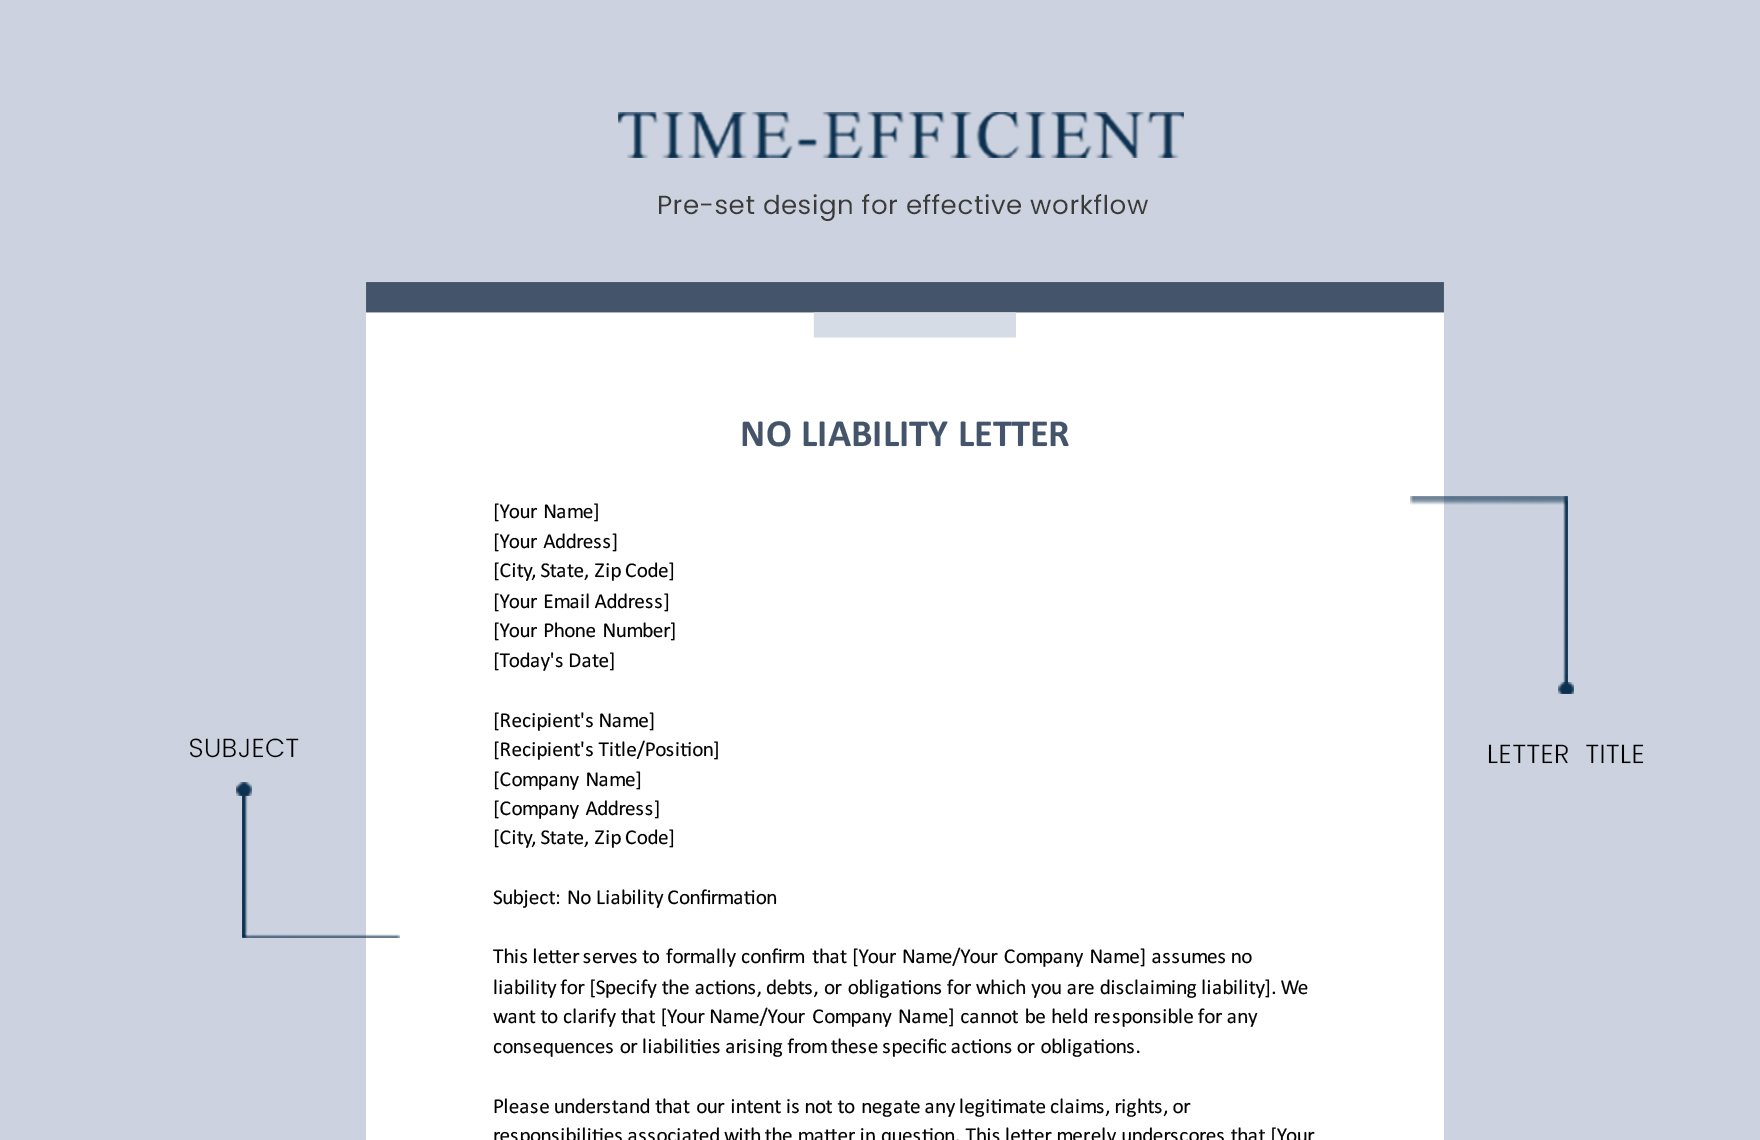 No Liability Letter